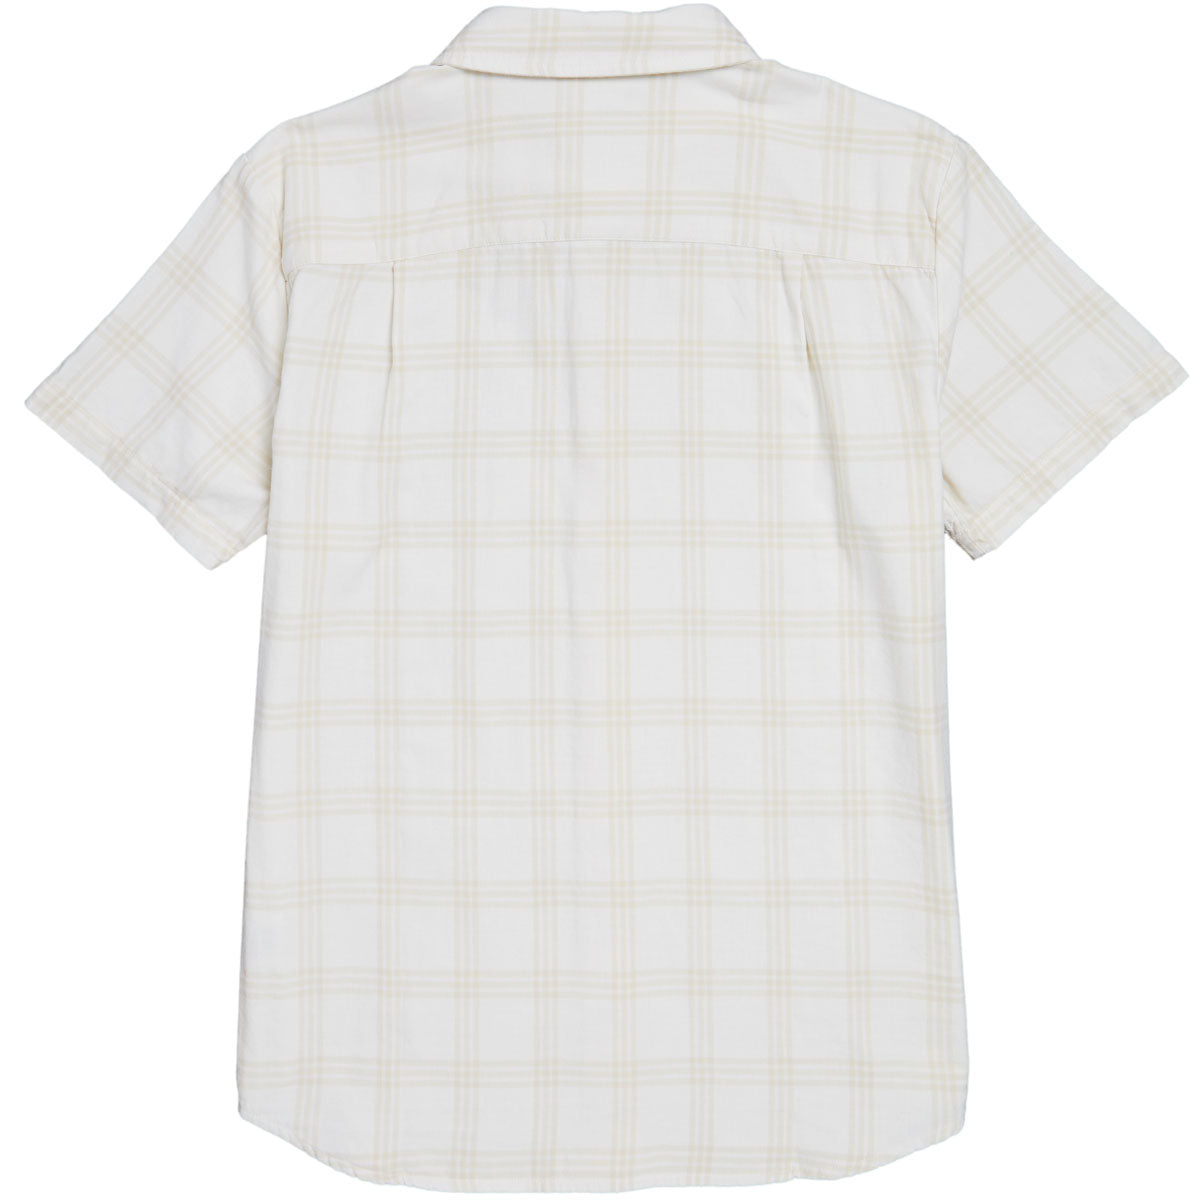 Brixton Crosby Plaid Shirt - Off White/Bison image 2